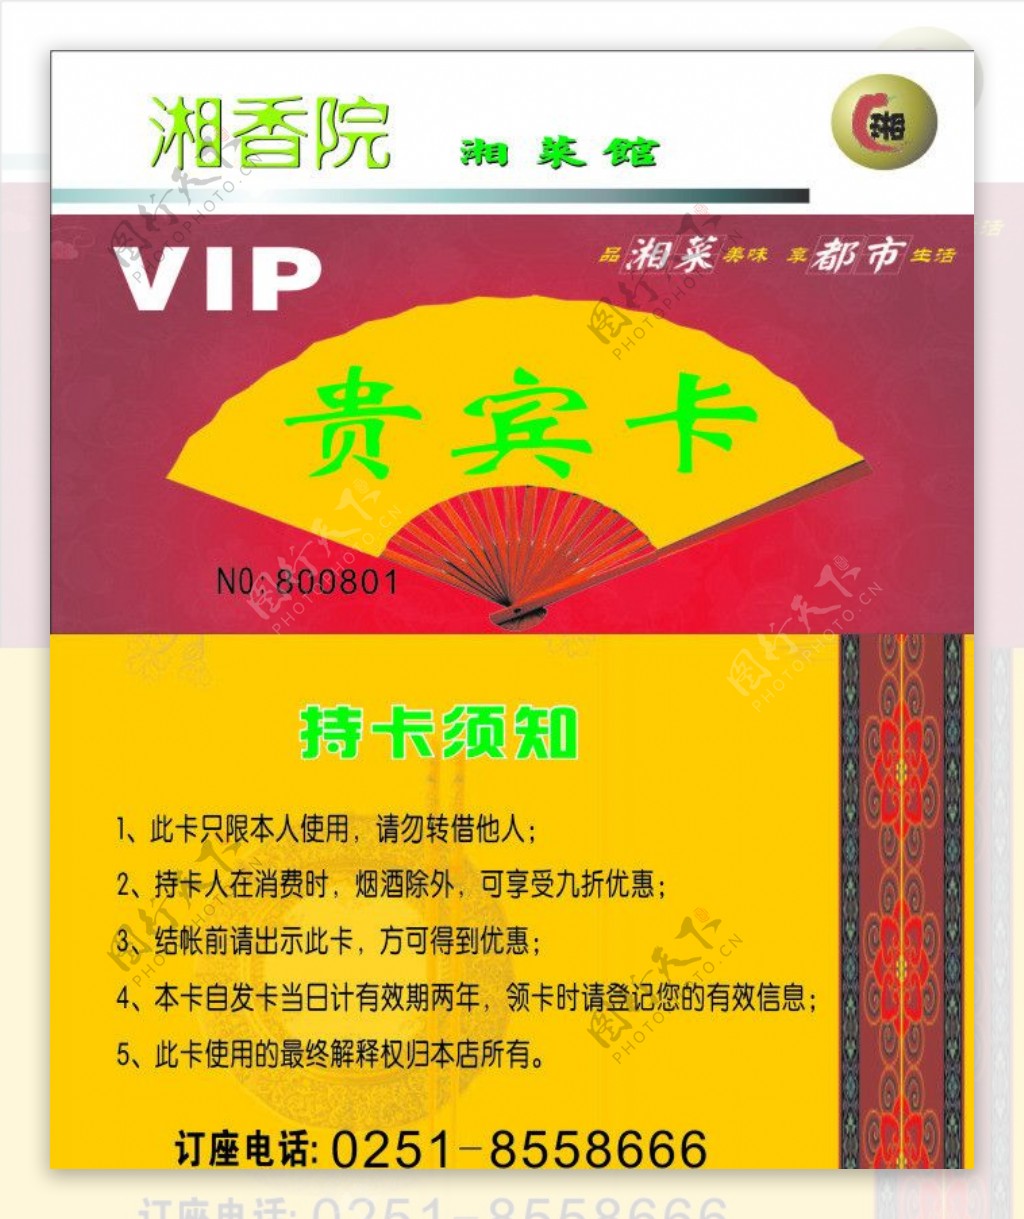 VIP卡湘菜馆图片